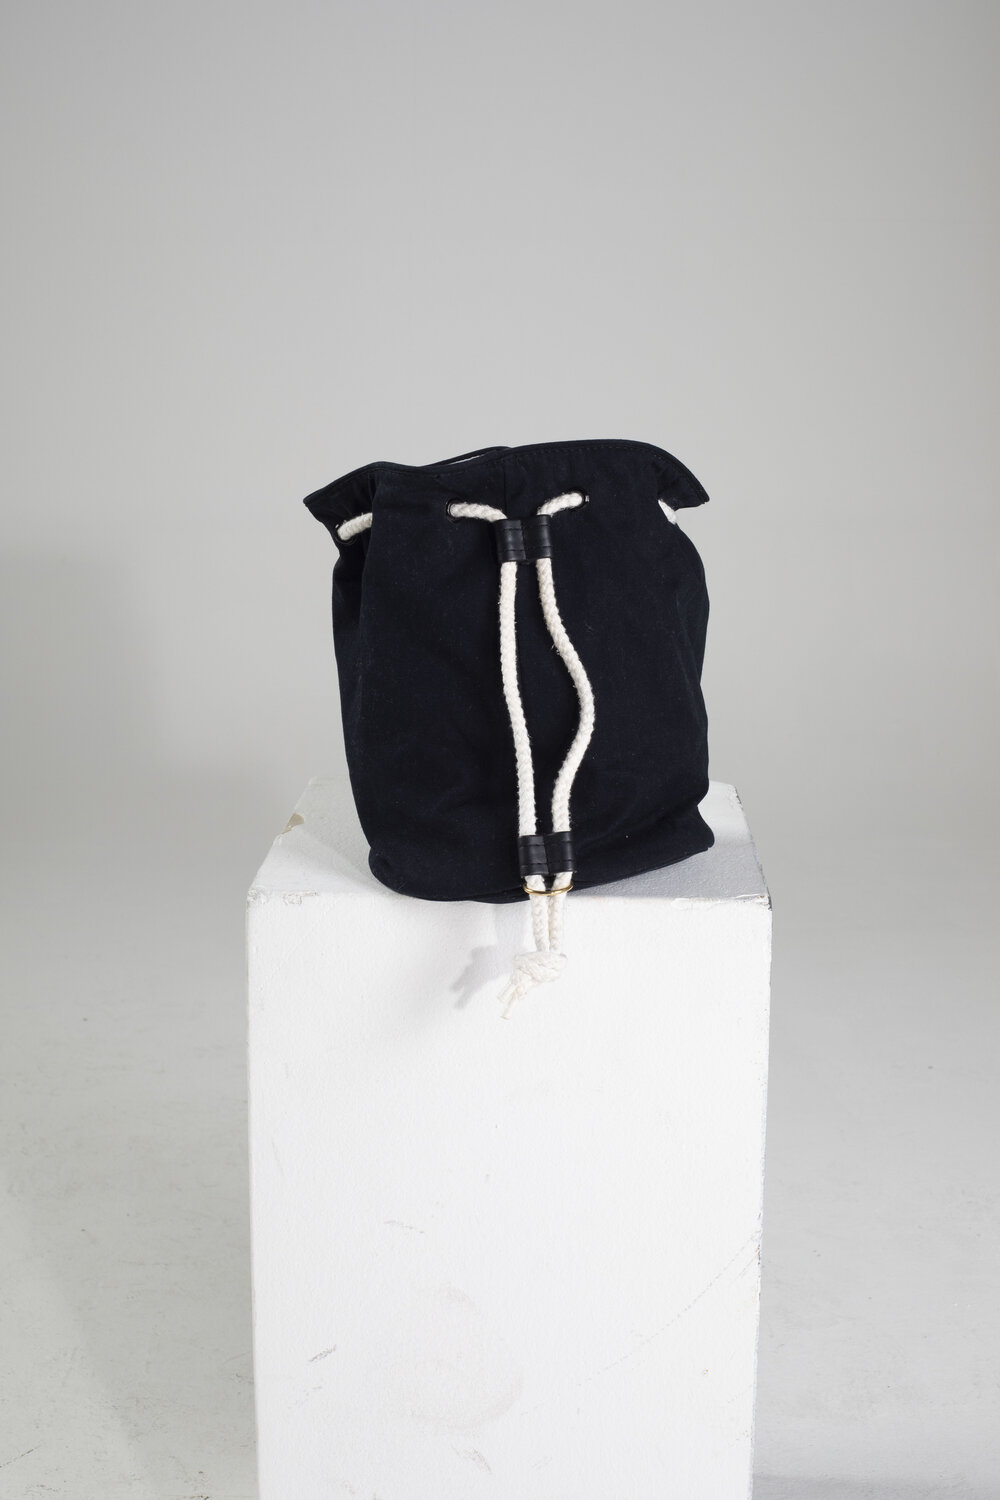 CHANEL Canvas Drawstring Backpack Black White 879578